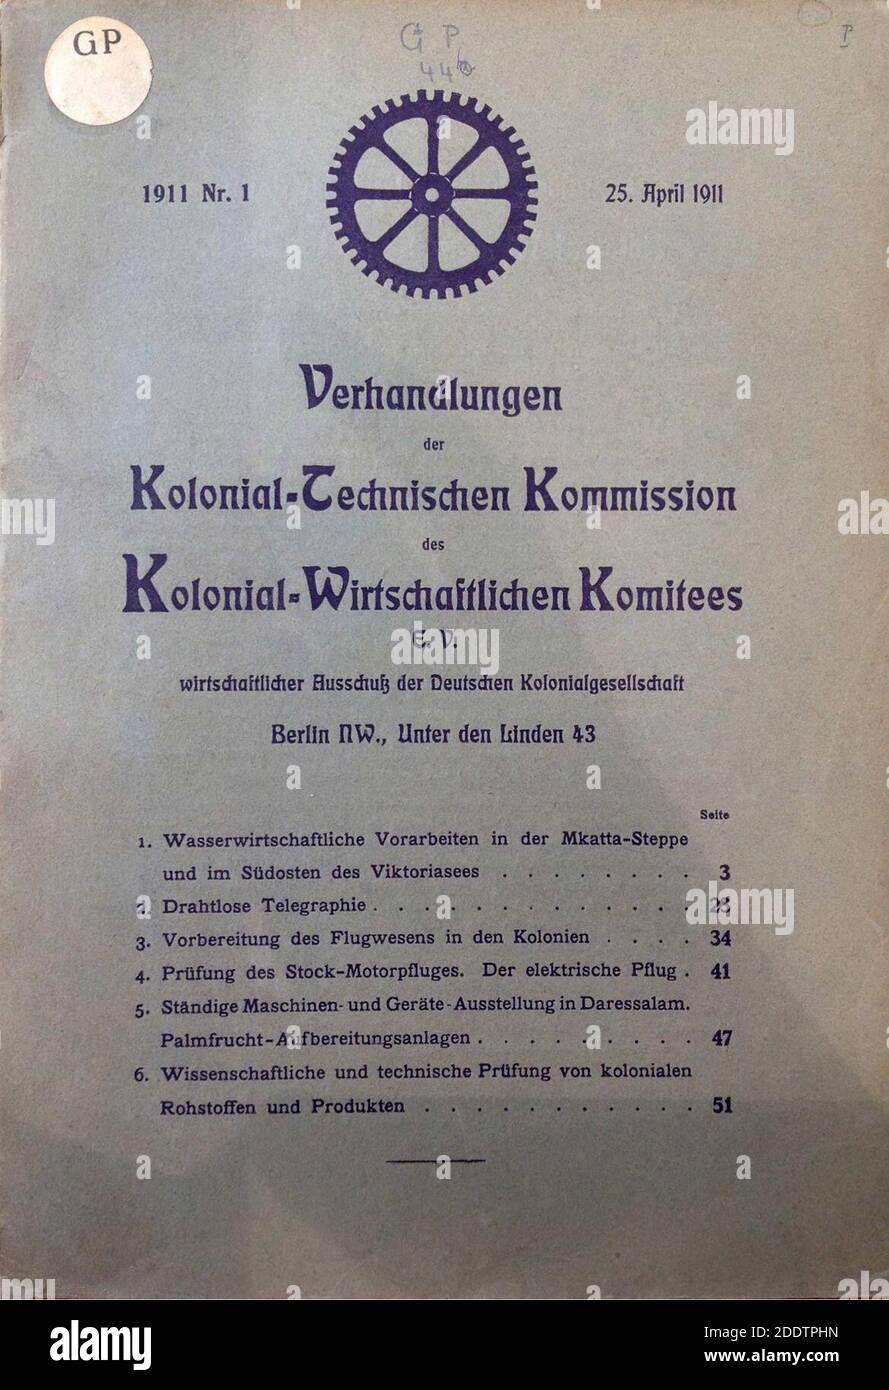 Kolonialtechnische Kommission - Sitzungsheft 1.1911. Stock Photo